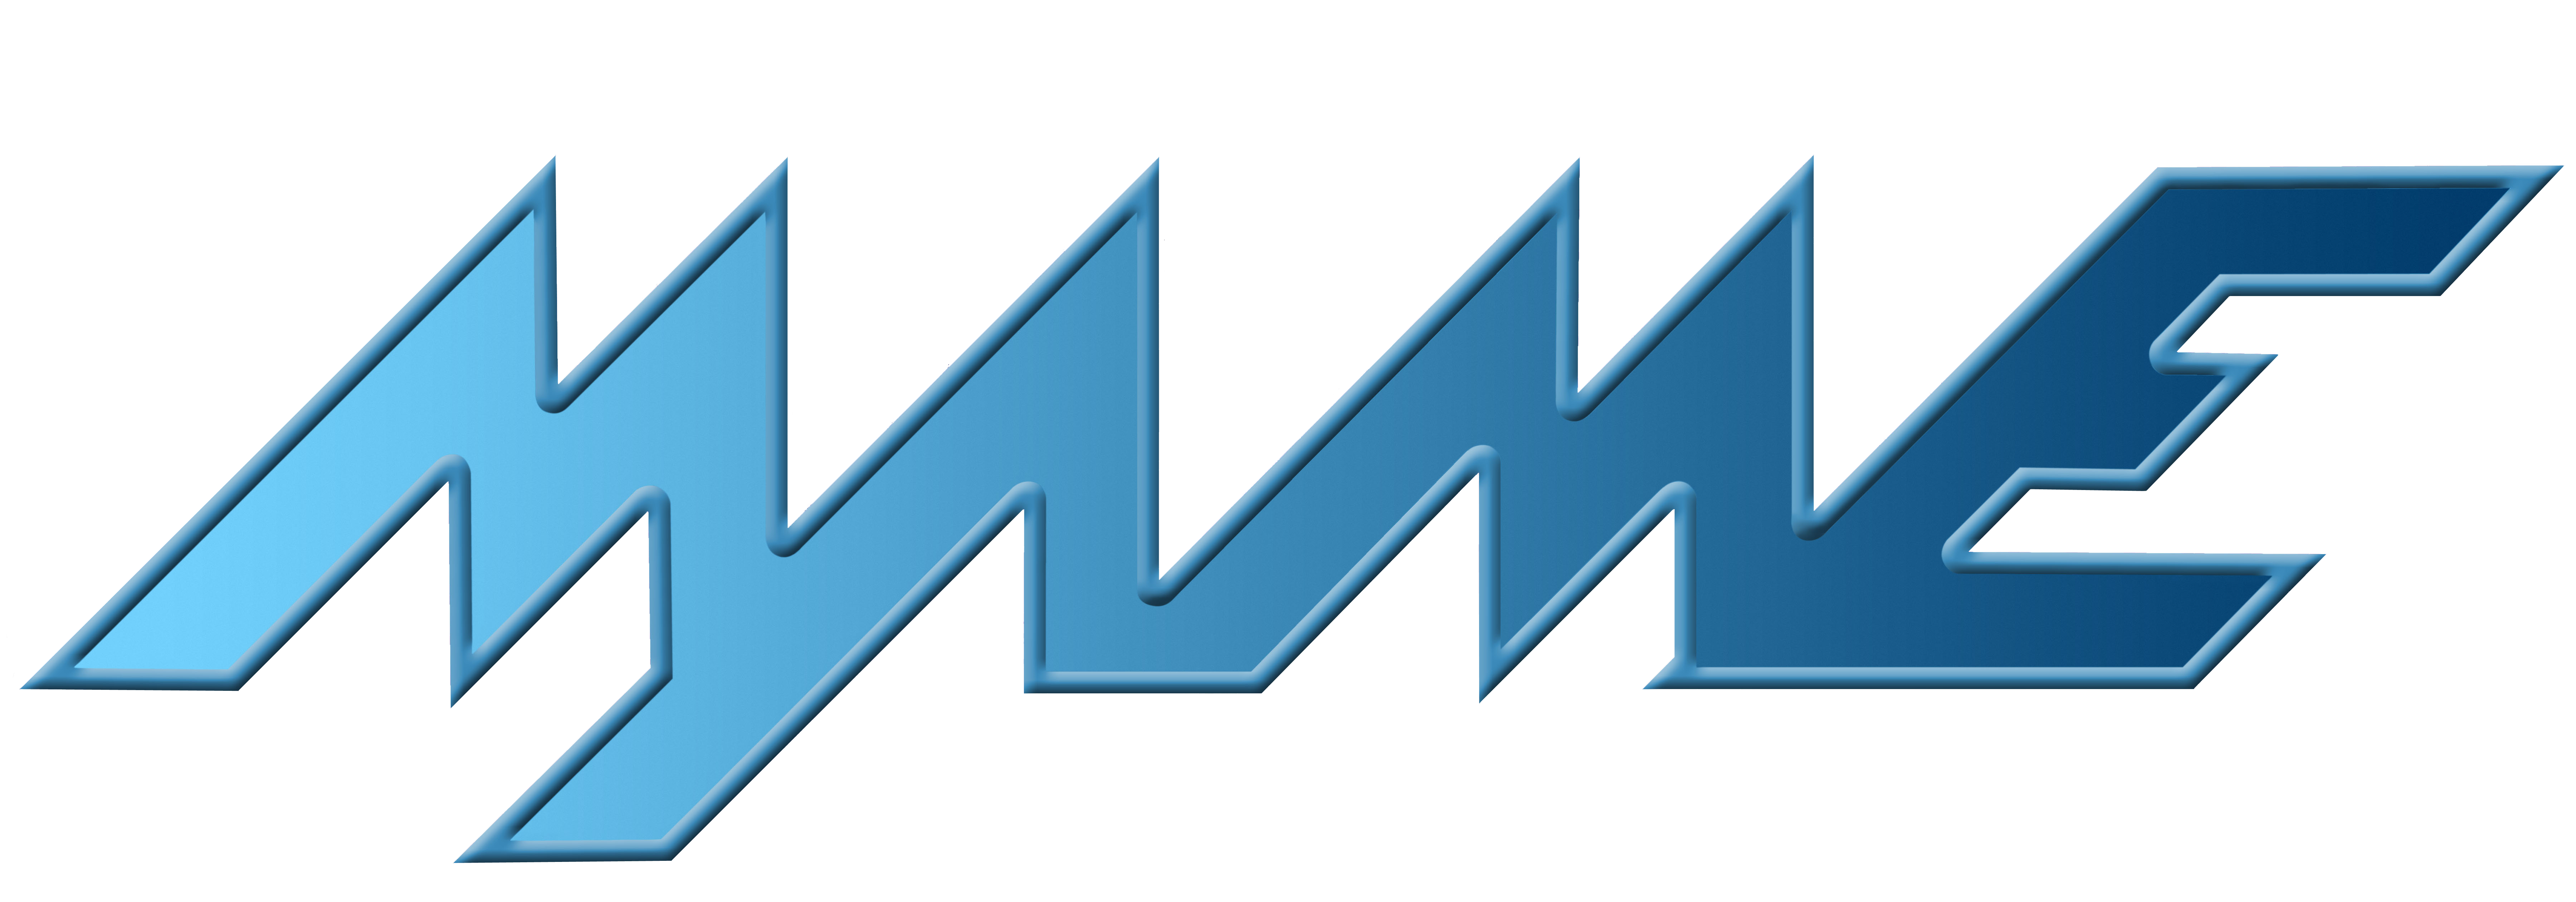 hires MAME Logo Transparent BGpng   arcadecontrolscom File 7200x2520